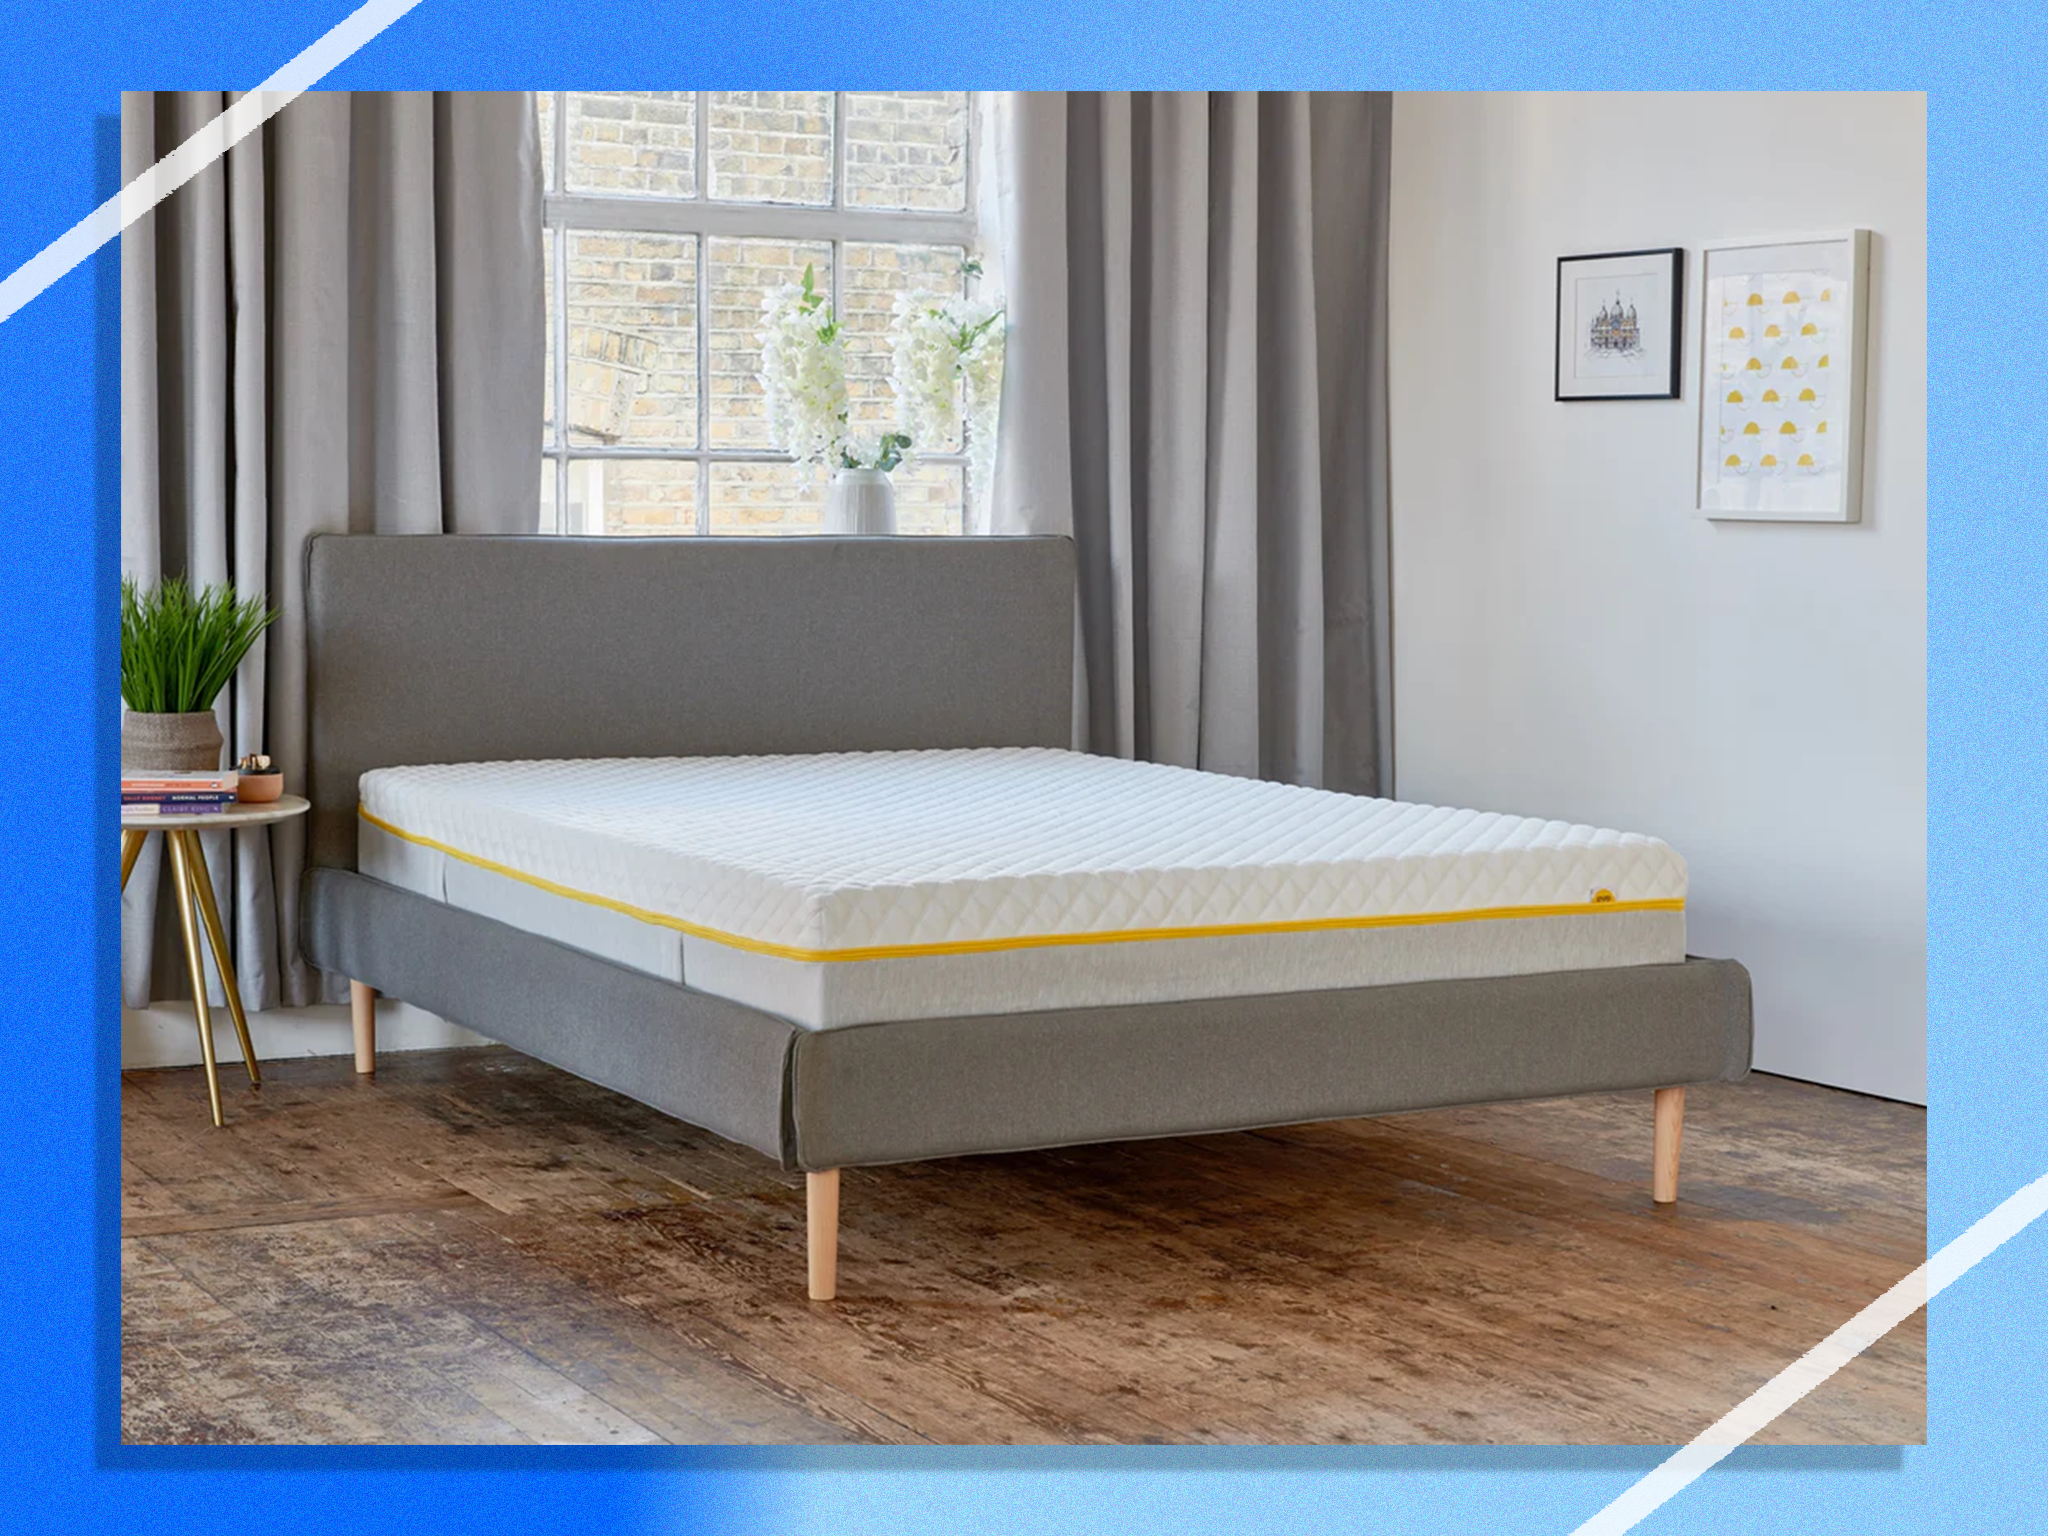 Eve Sleep’s premium mattress lives up to its name